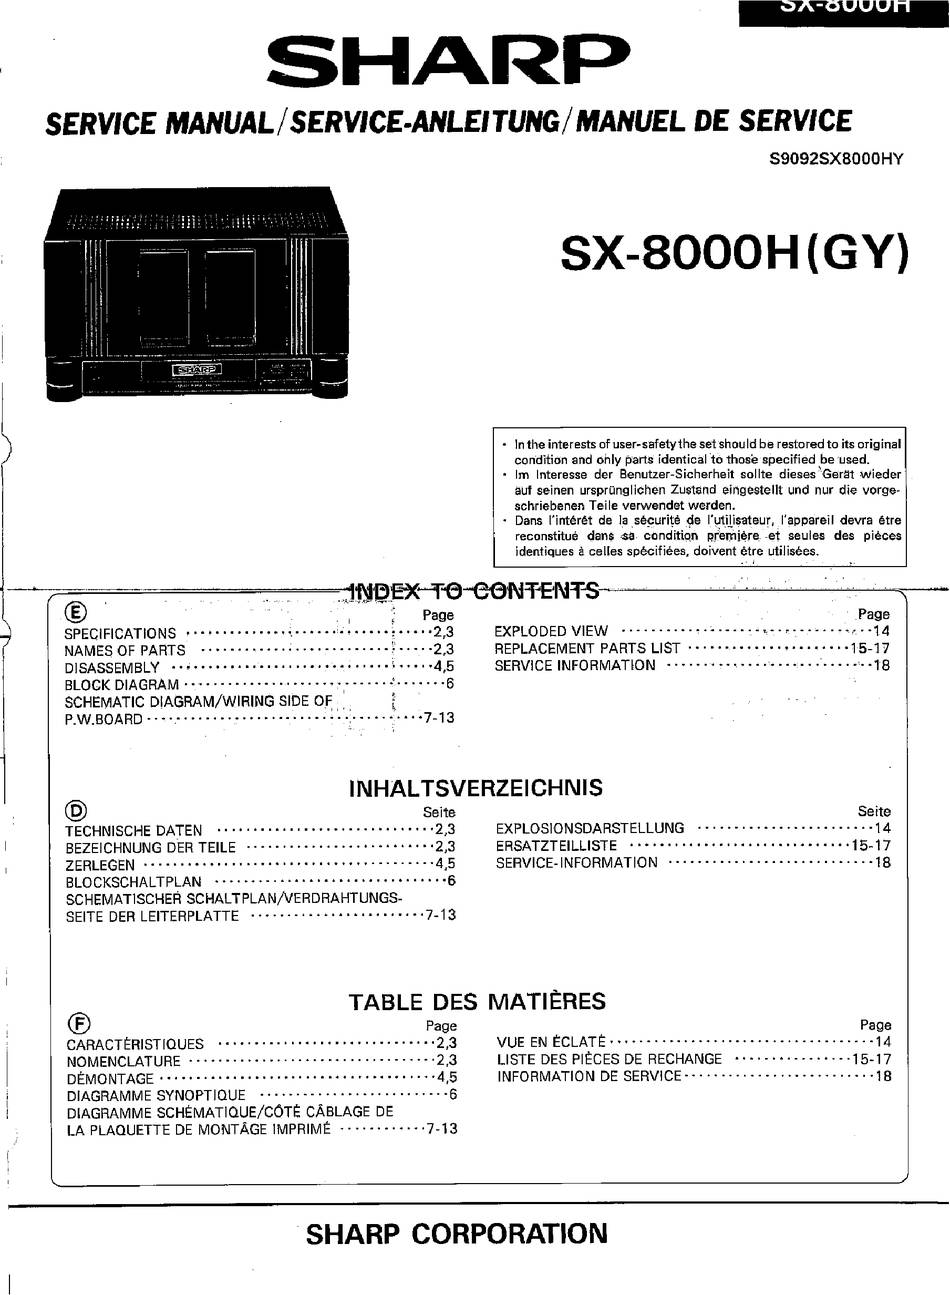 Sharp SX-8000H